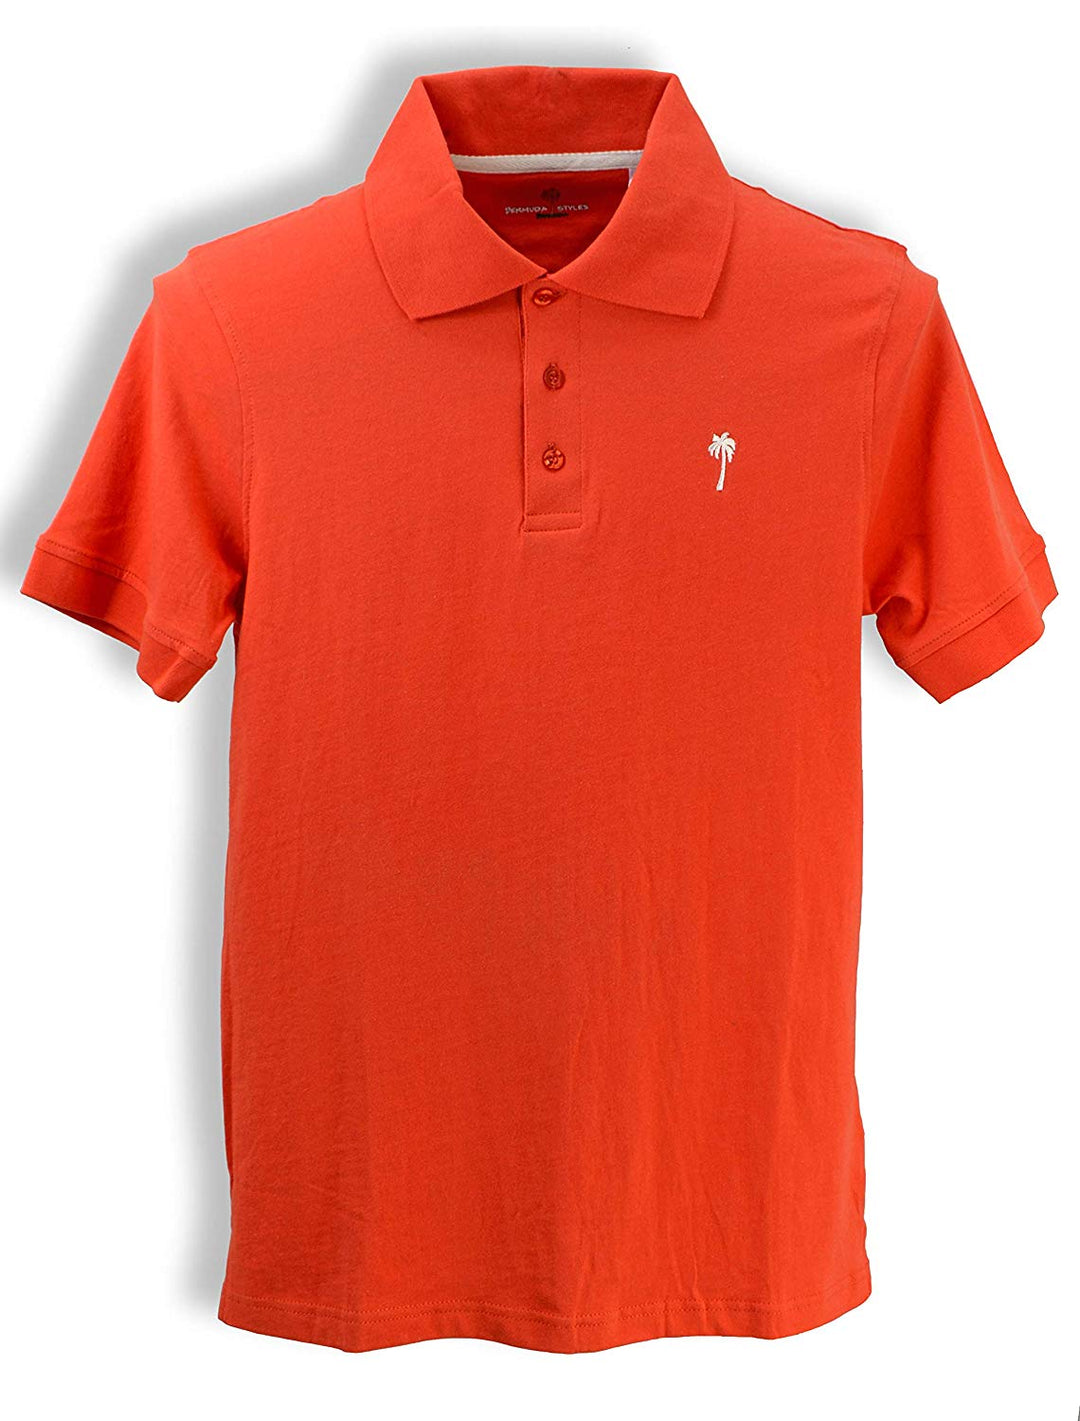 Bermuda Styles Polo Shirt